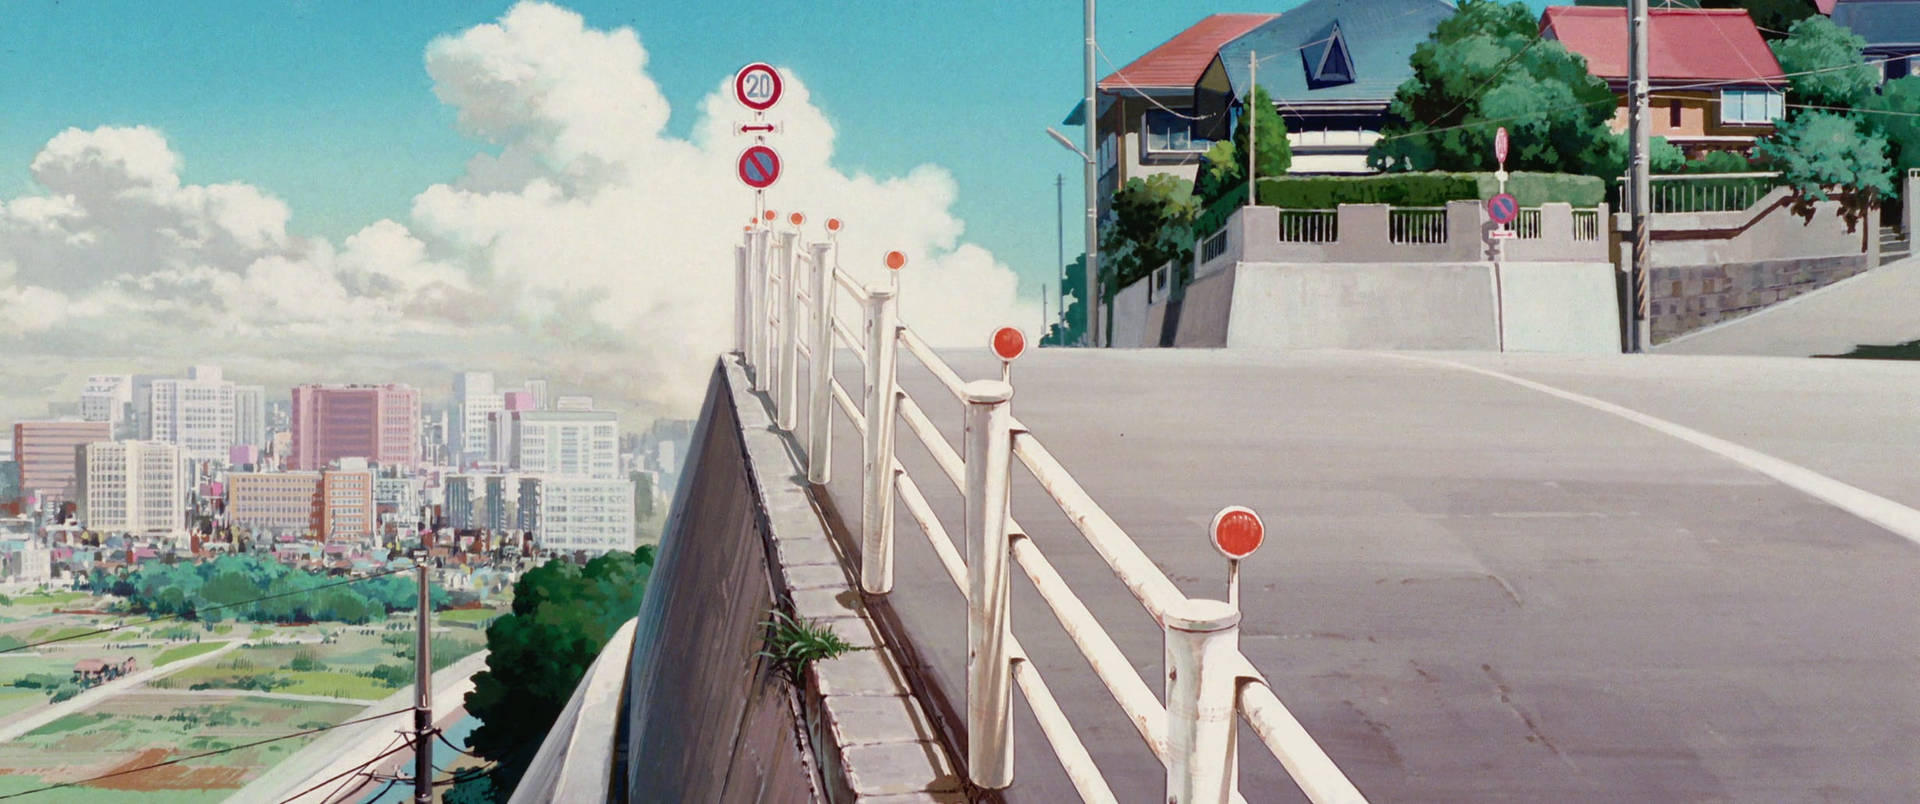 Enchanting Studio Ghibli Scenic Town and Residential Houses Wallpaper